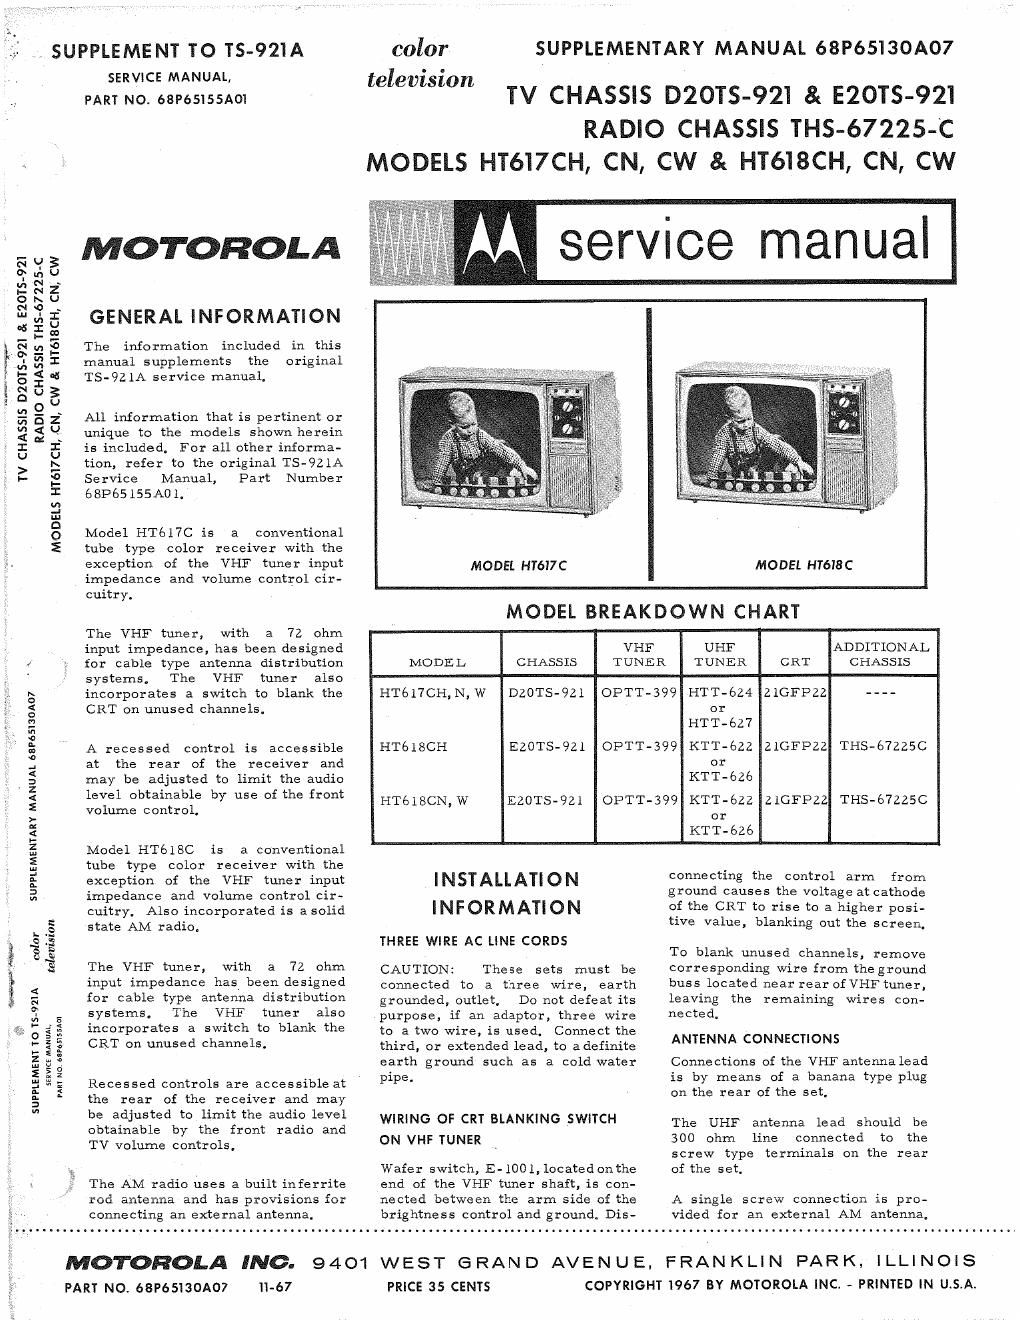 motorola ht 617 cn service manual